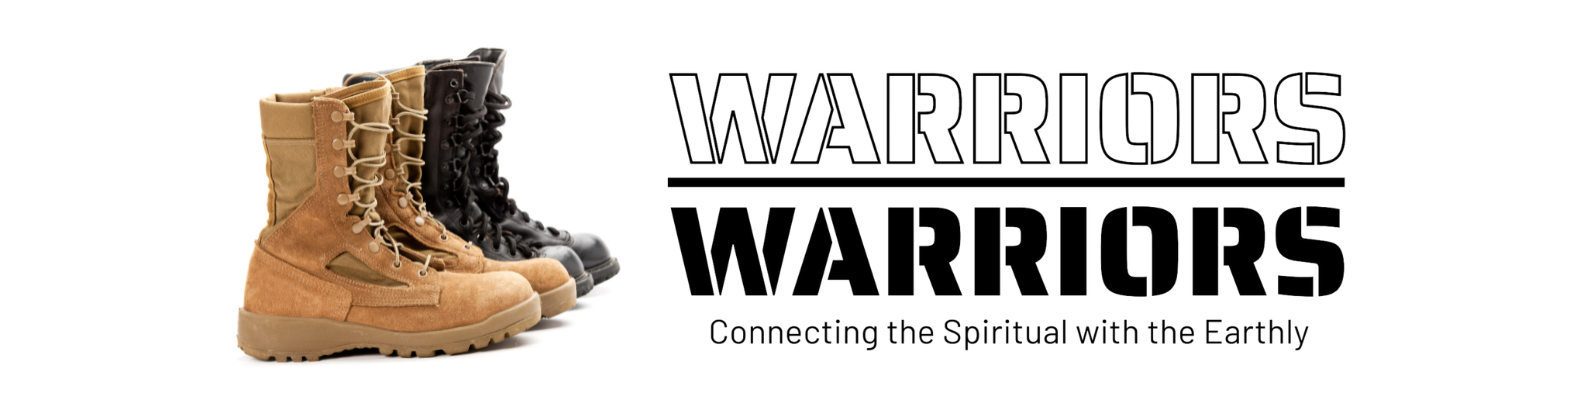 warriors with warriors logo